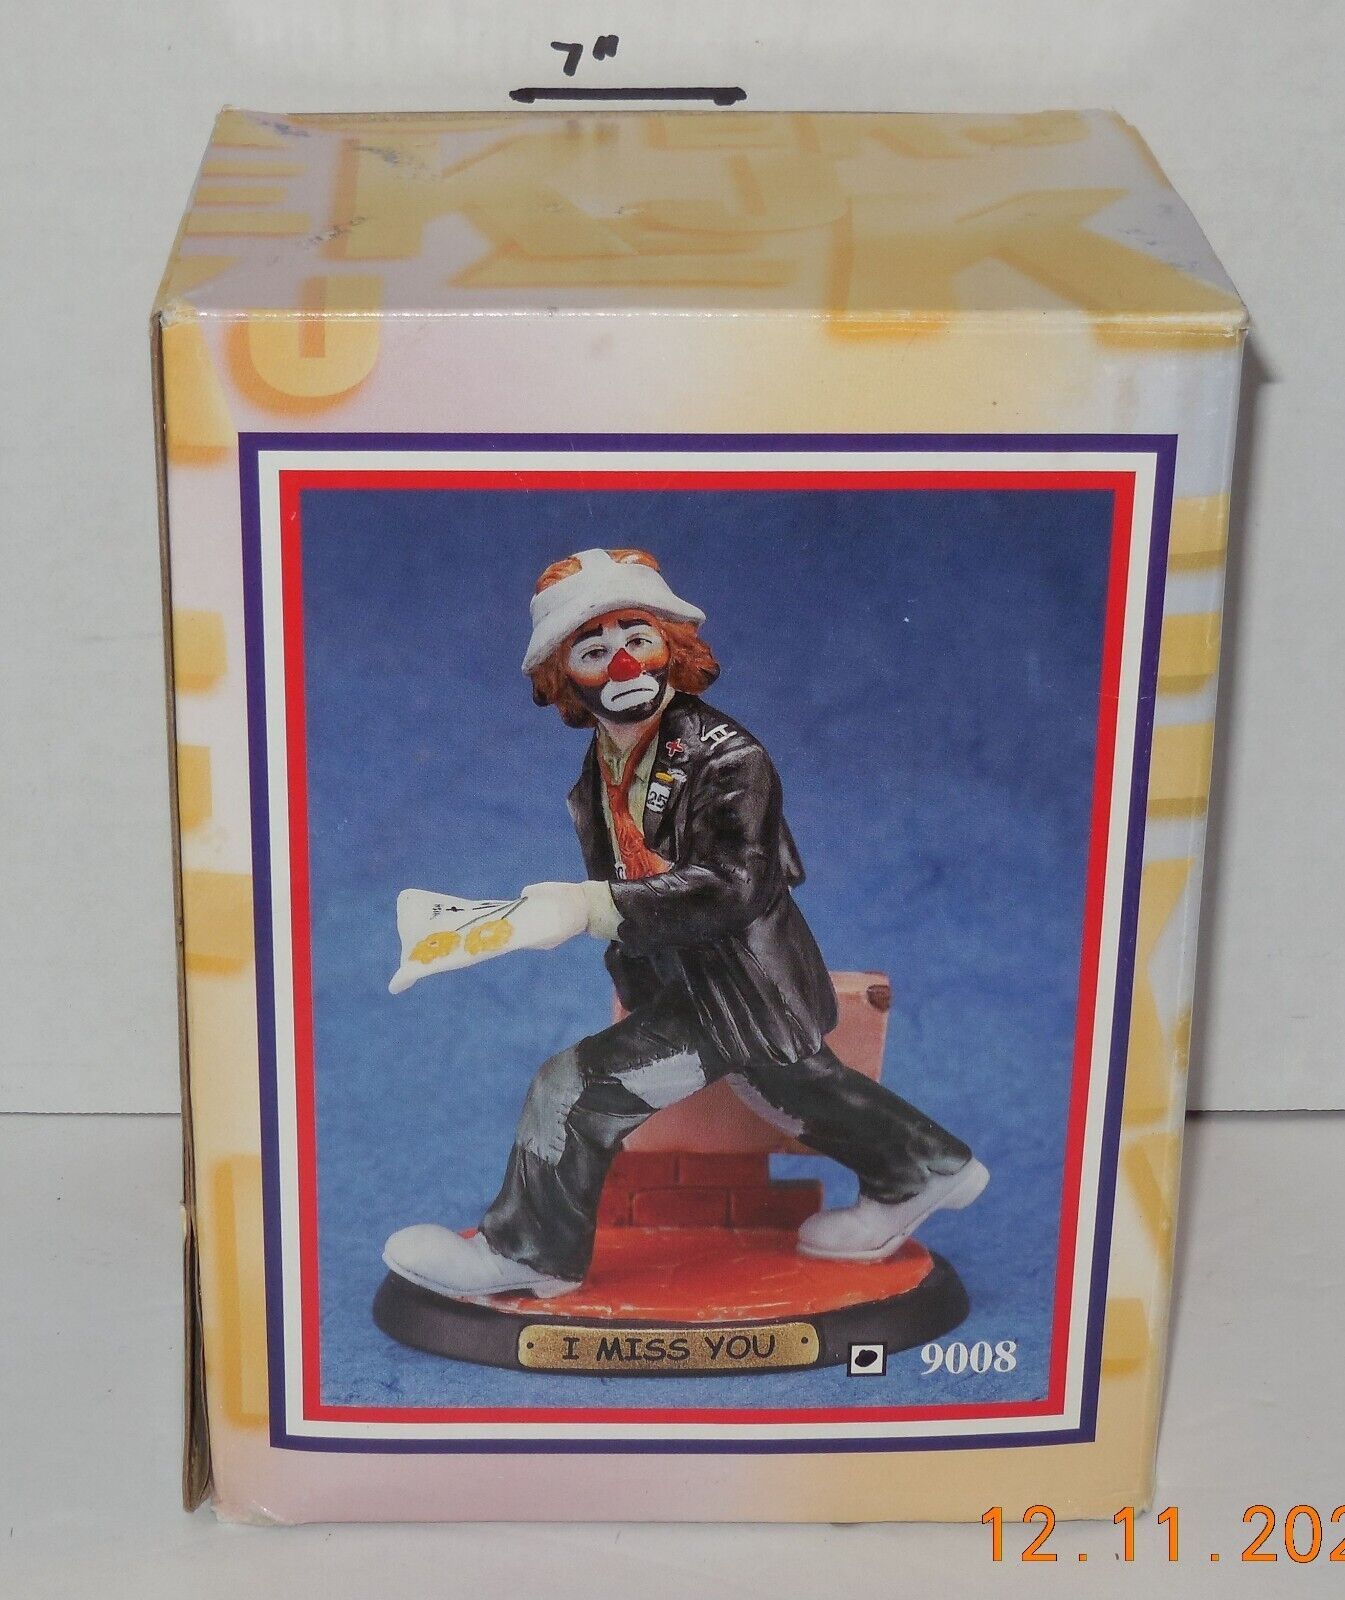 1998 Flambro Imports Emmett Kelly Jr. "I Miss You” Clown Porcelain Figurine - $34.65